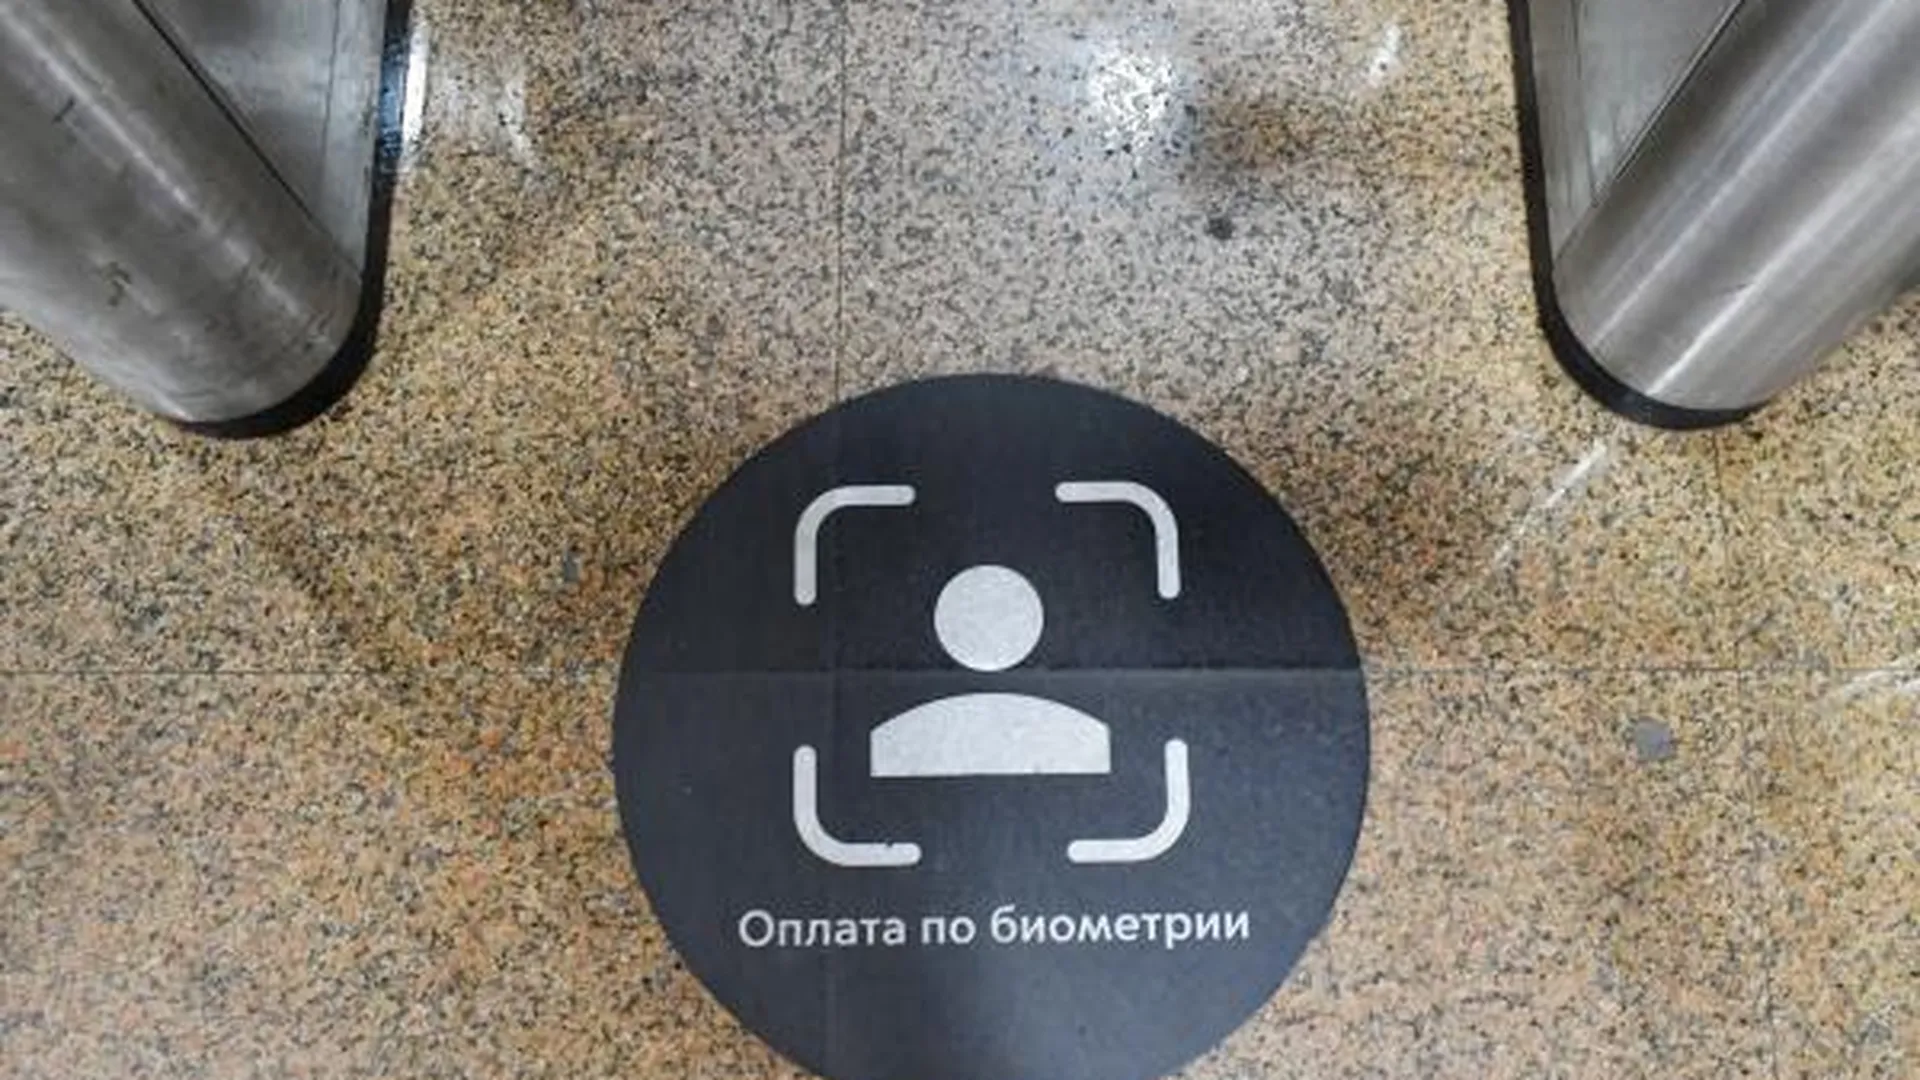 Внедрение биометрии на транспорте в России отложили